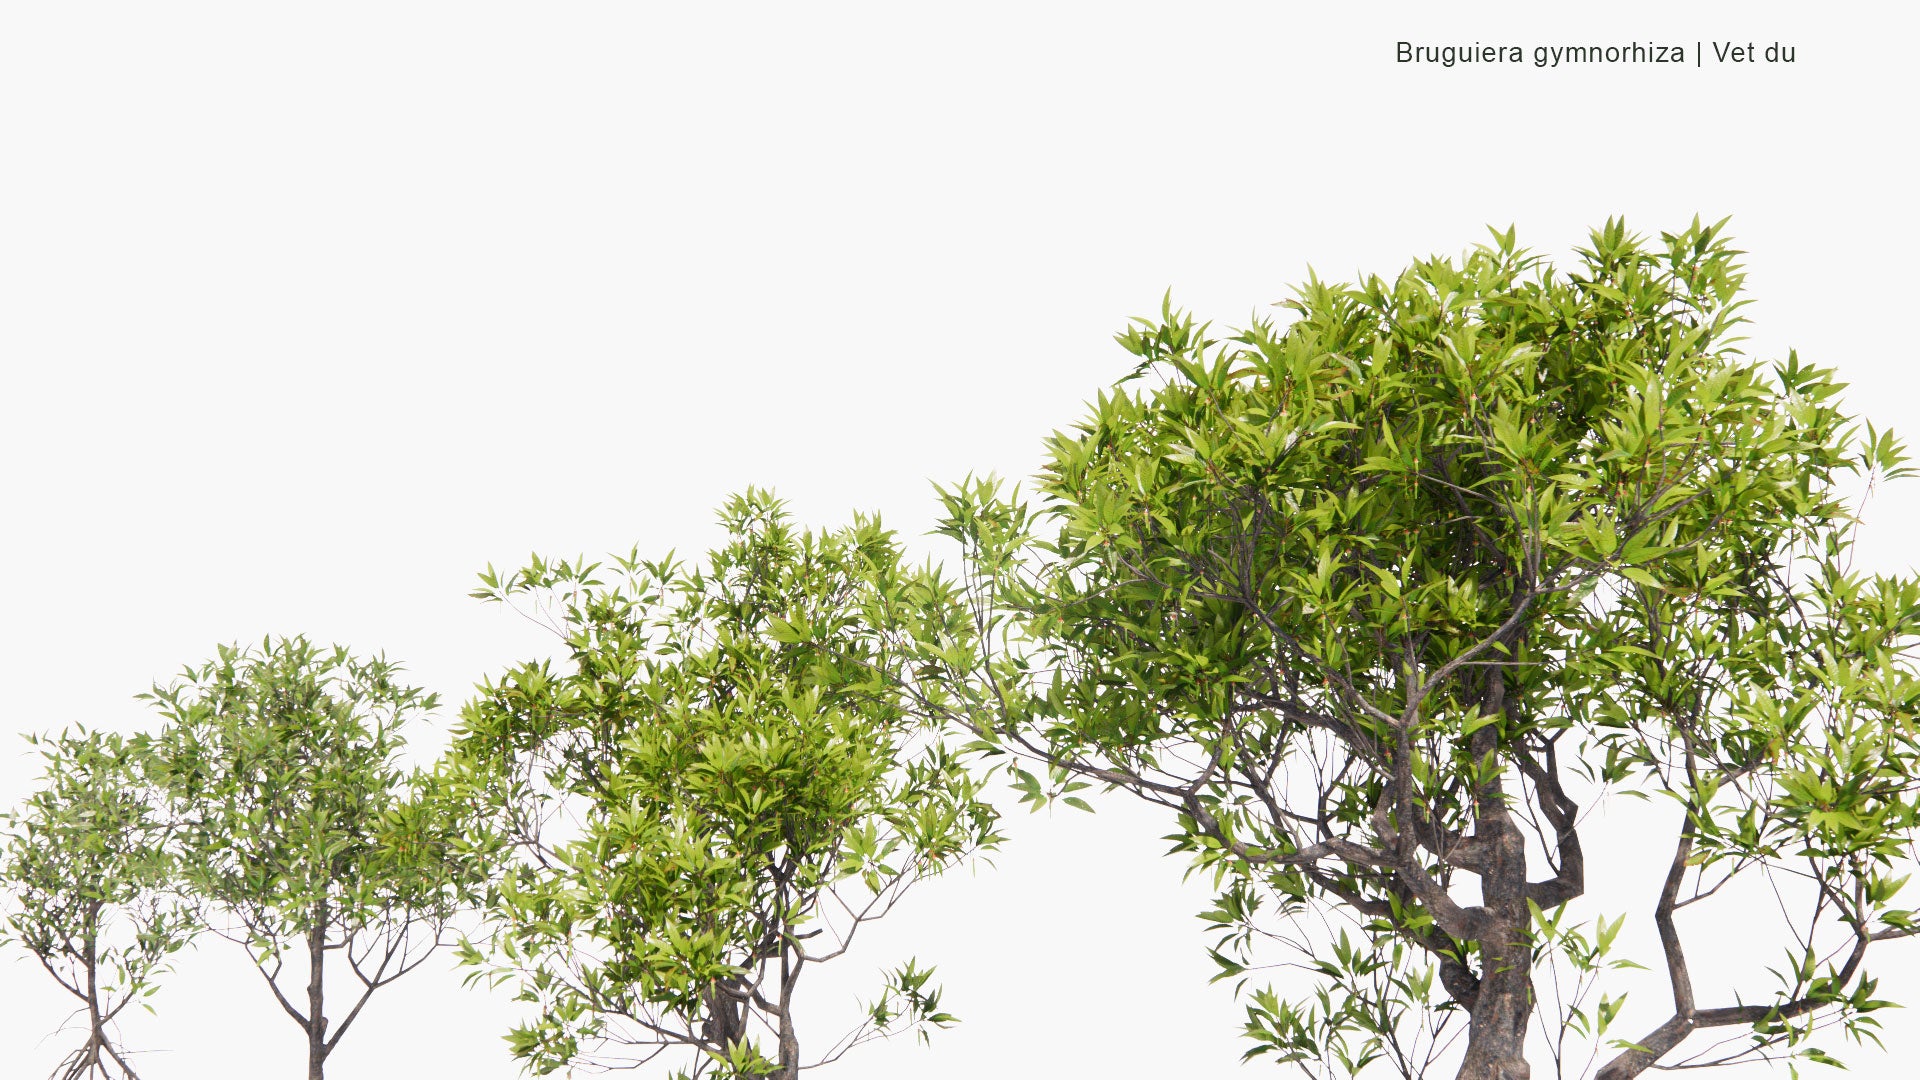 Low Poly Bruguiera Gymnorhiza - Vet Du, Large-Leafed Orange Mangrove, Oriental Mangrove (3D Model)